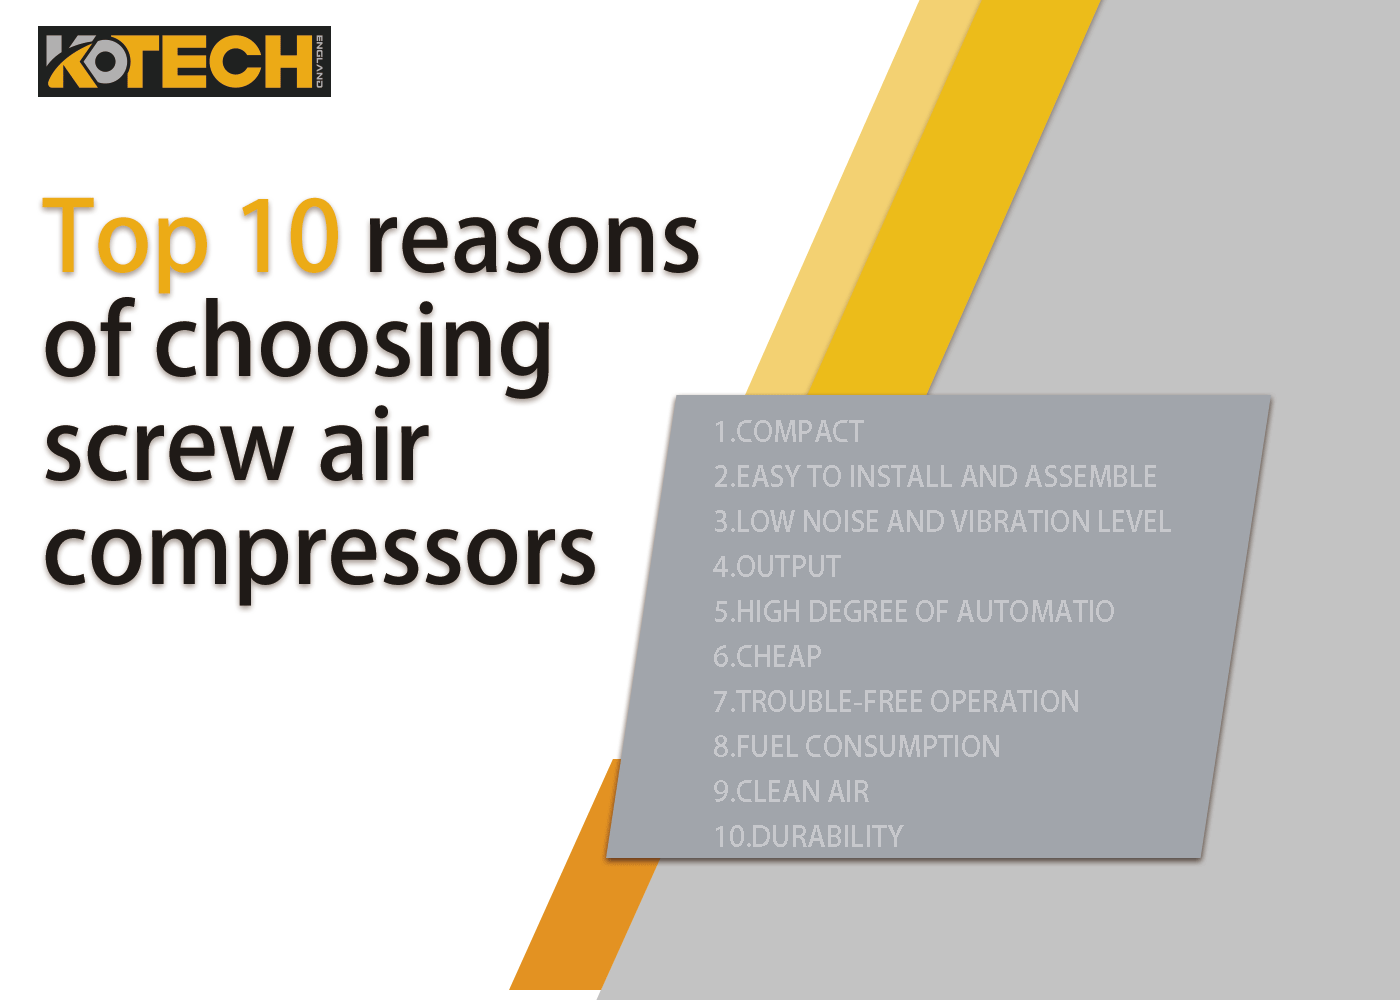 Top 10 reasons of choosing screw air compressors